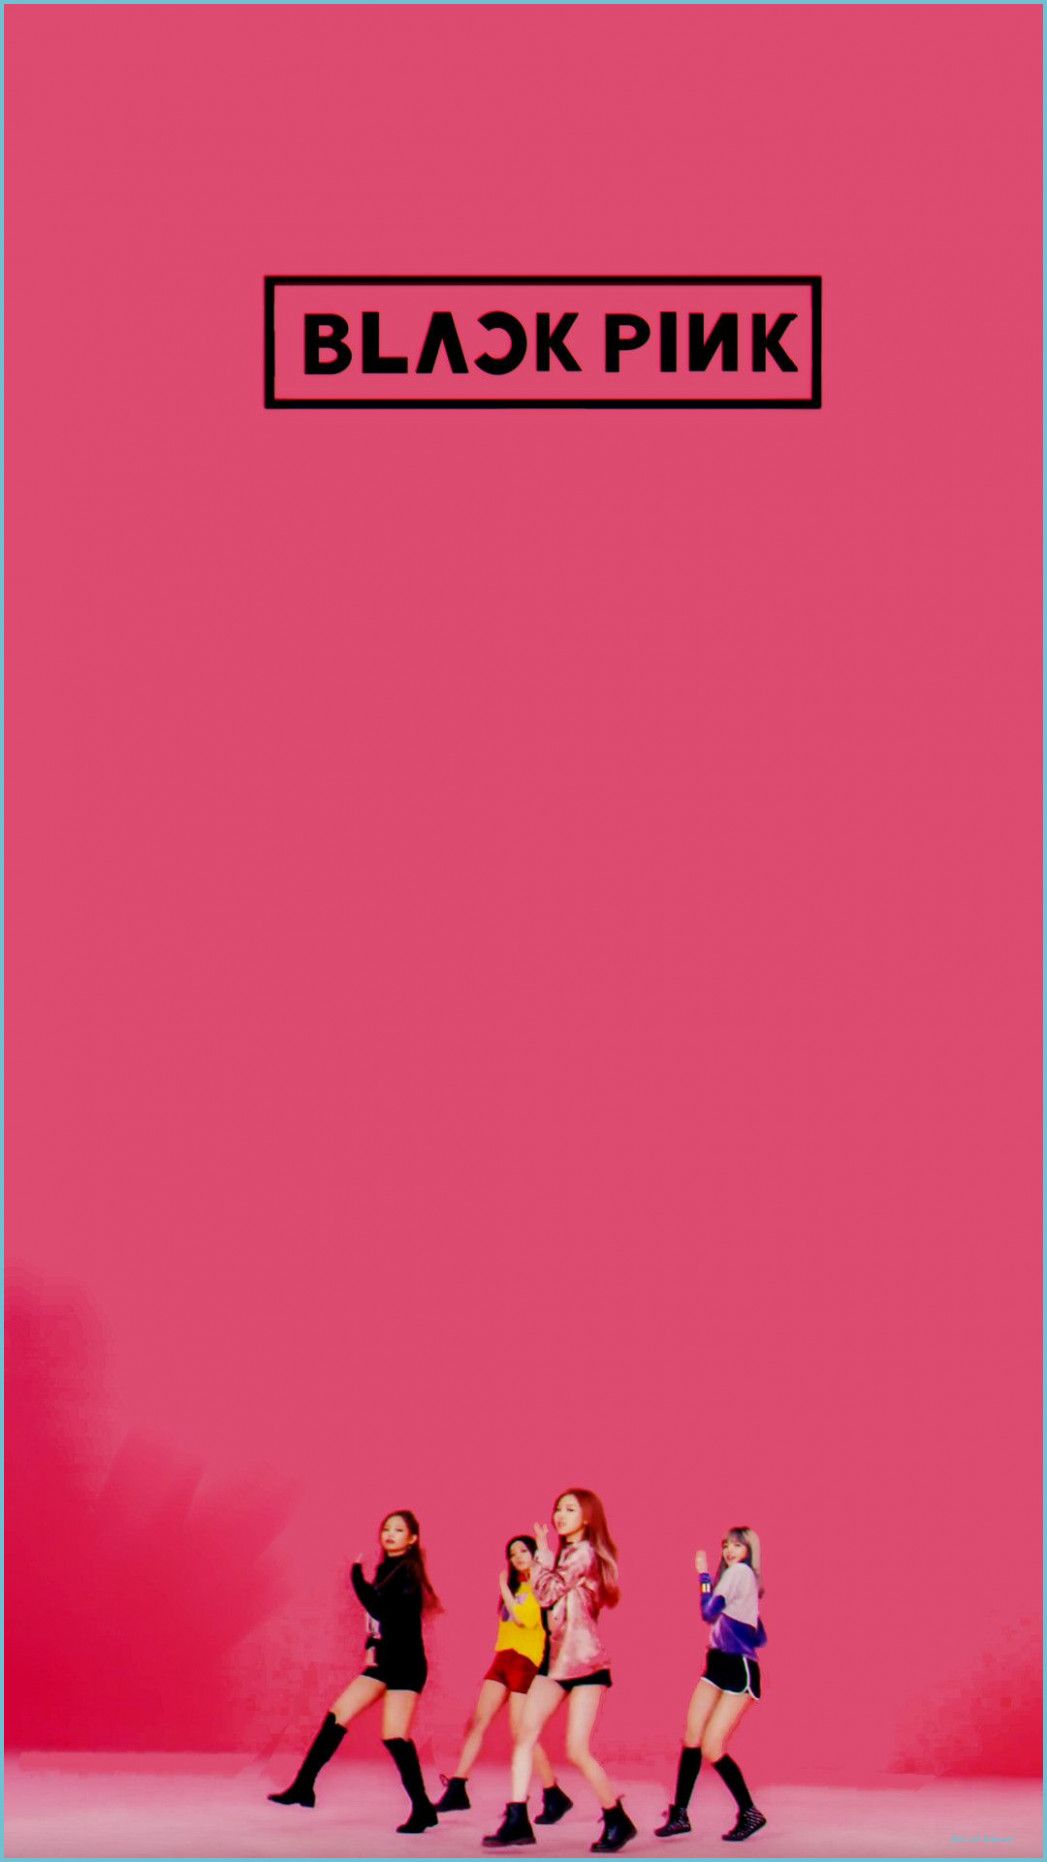 BLACK PINK Wallpaper [screen caps] Black pink background